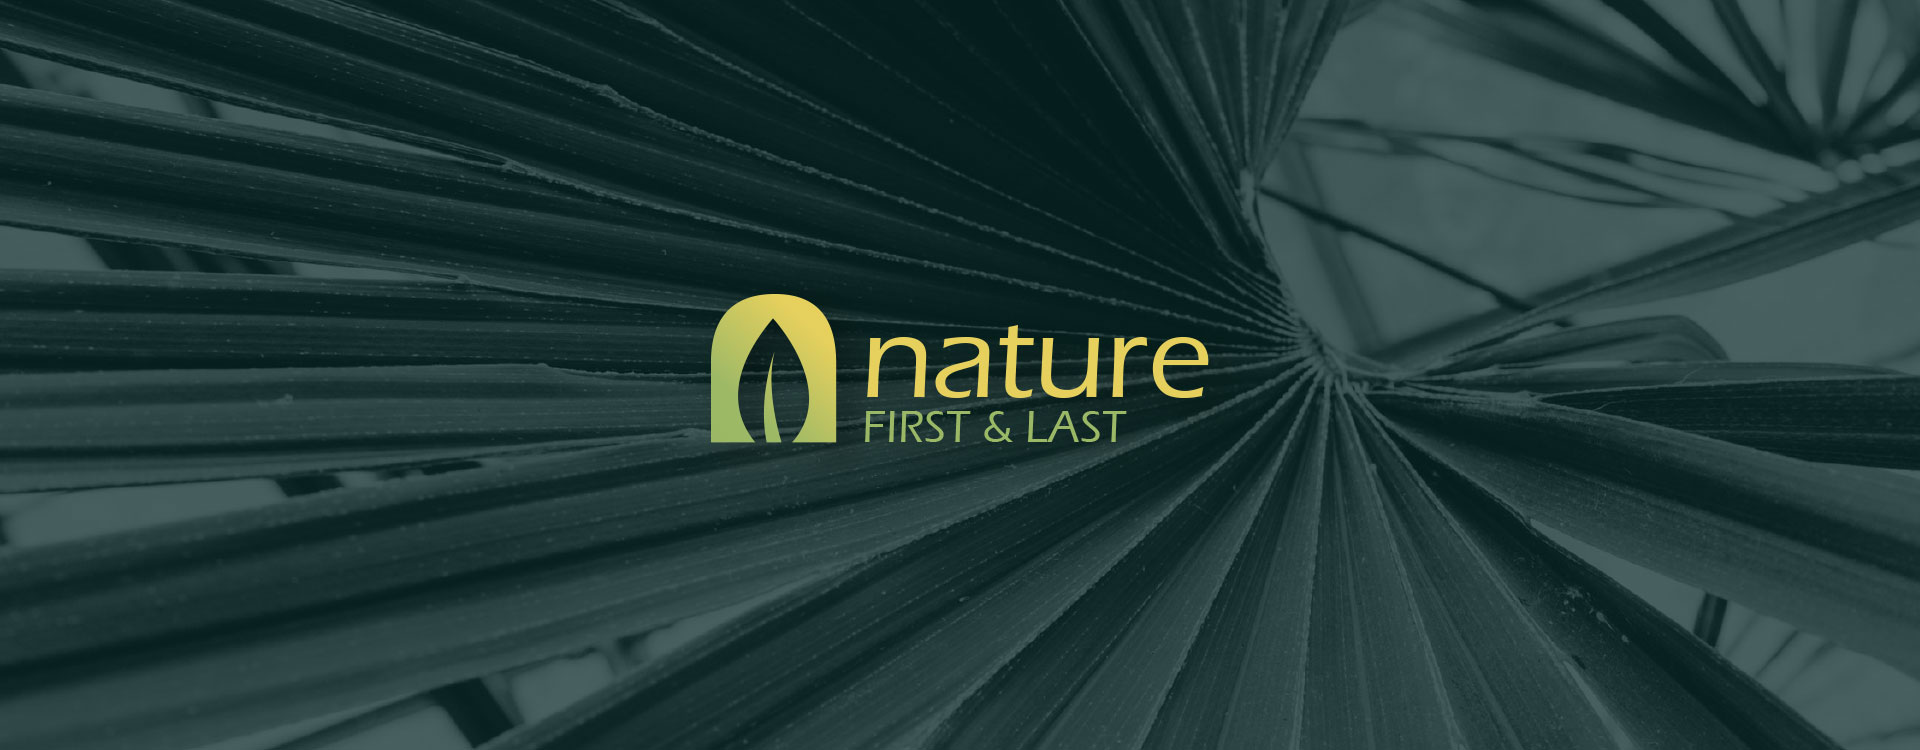 Logo design for organic FMCG brand - Nature - First & Last